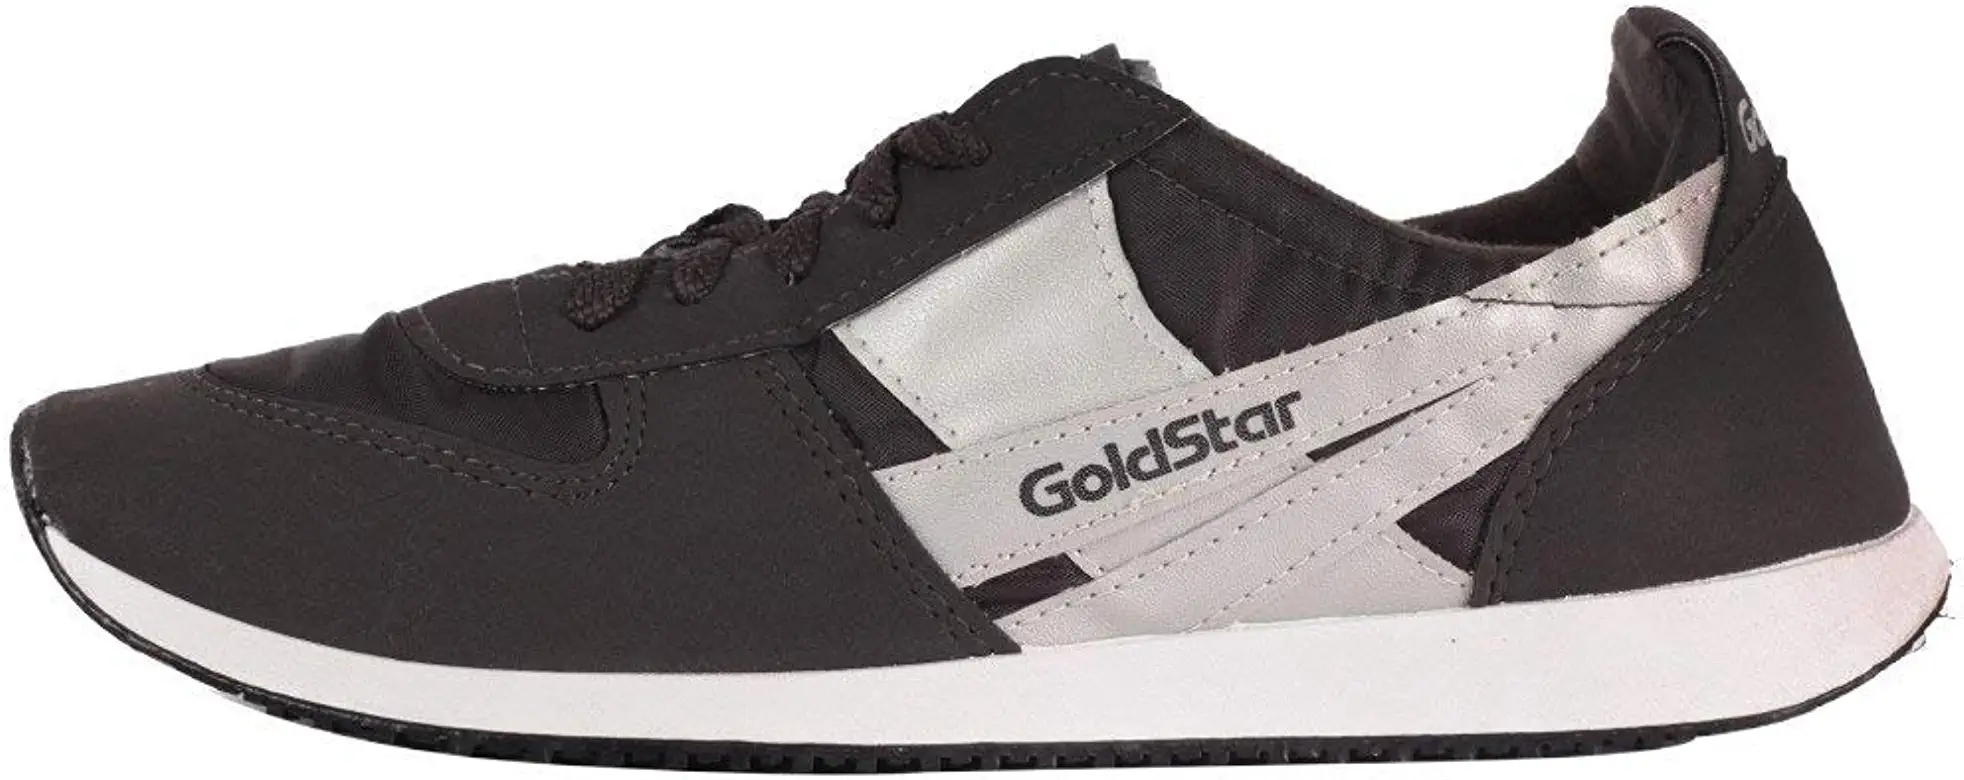 Goldstar men's running shoes